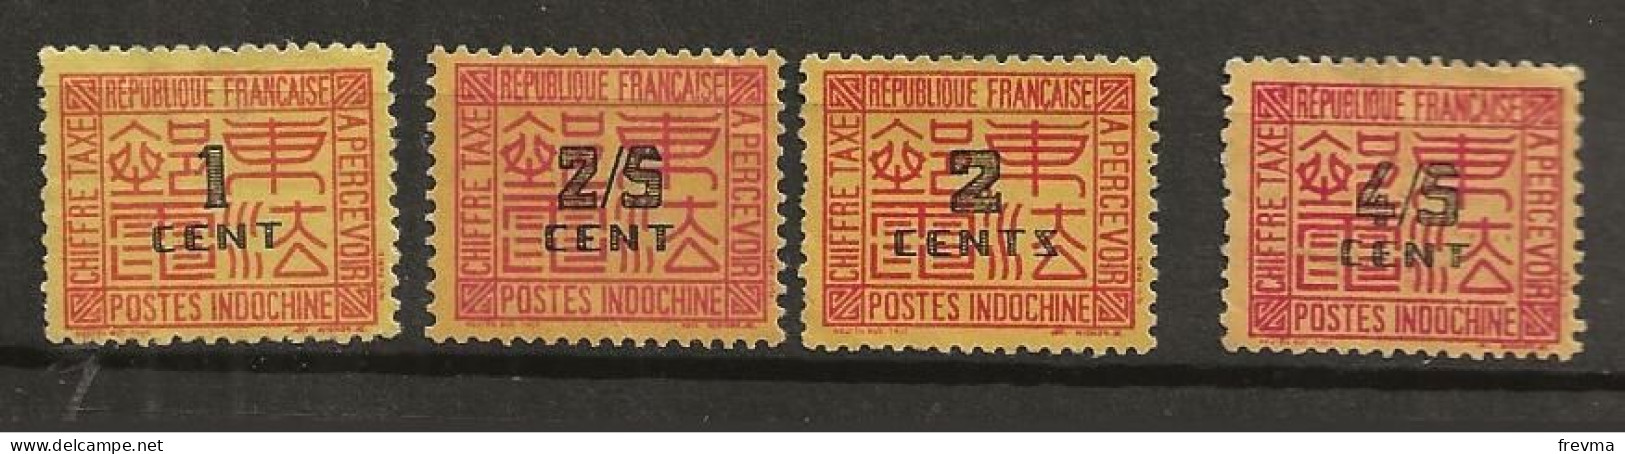 Timbre Poste Indochine Taxe Republique Francaise 1931-1941 - Timbres-taxe